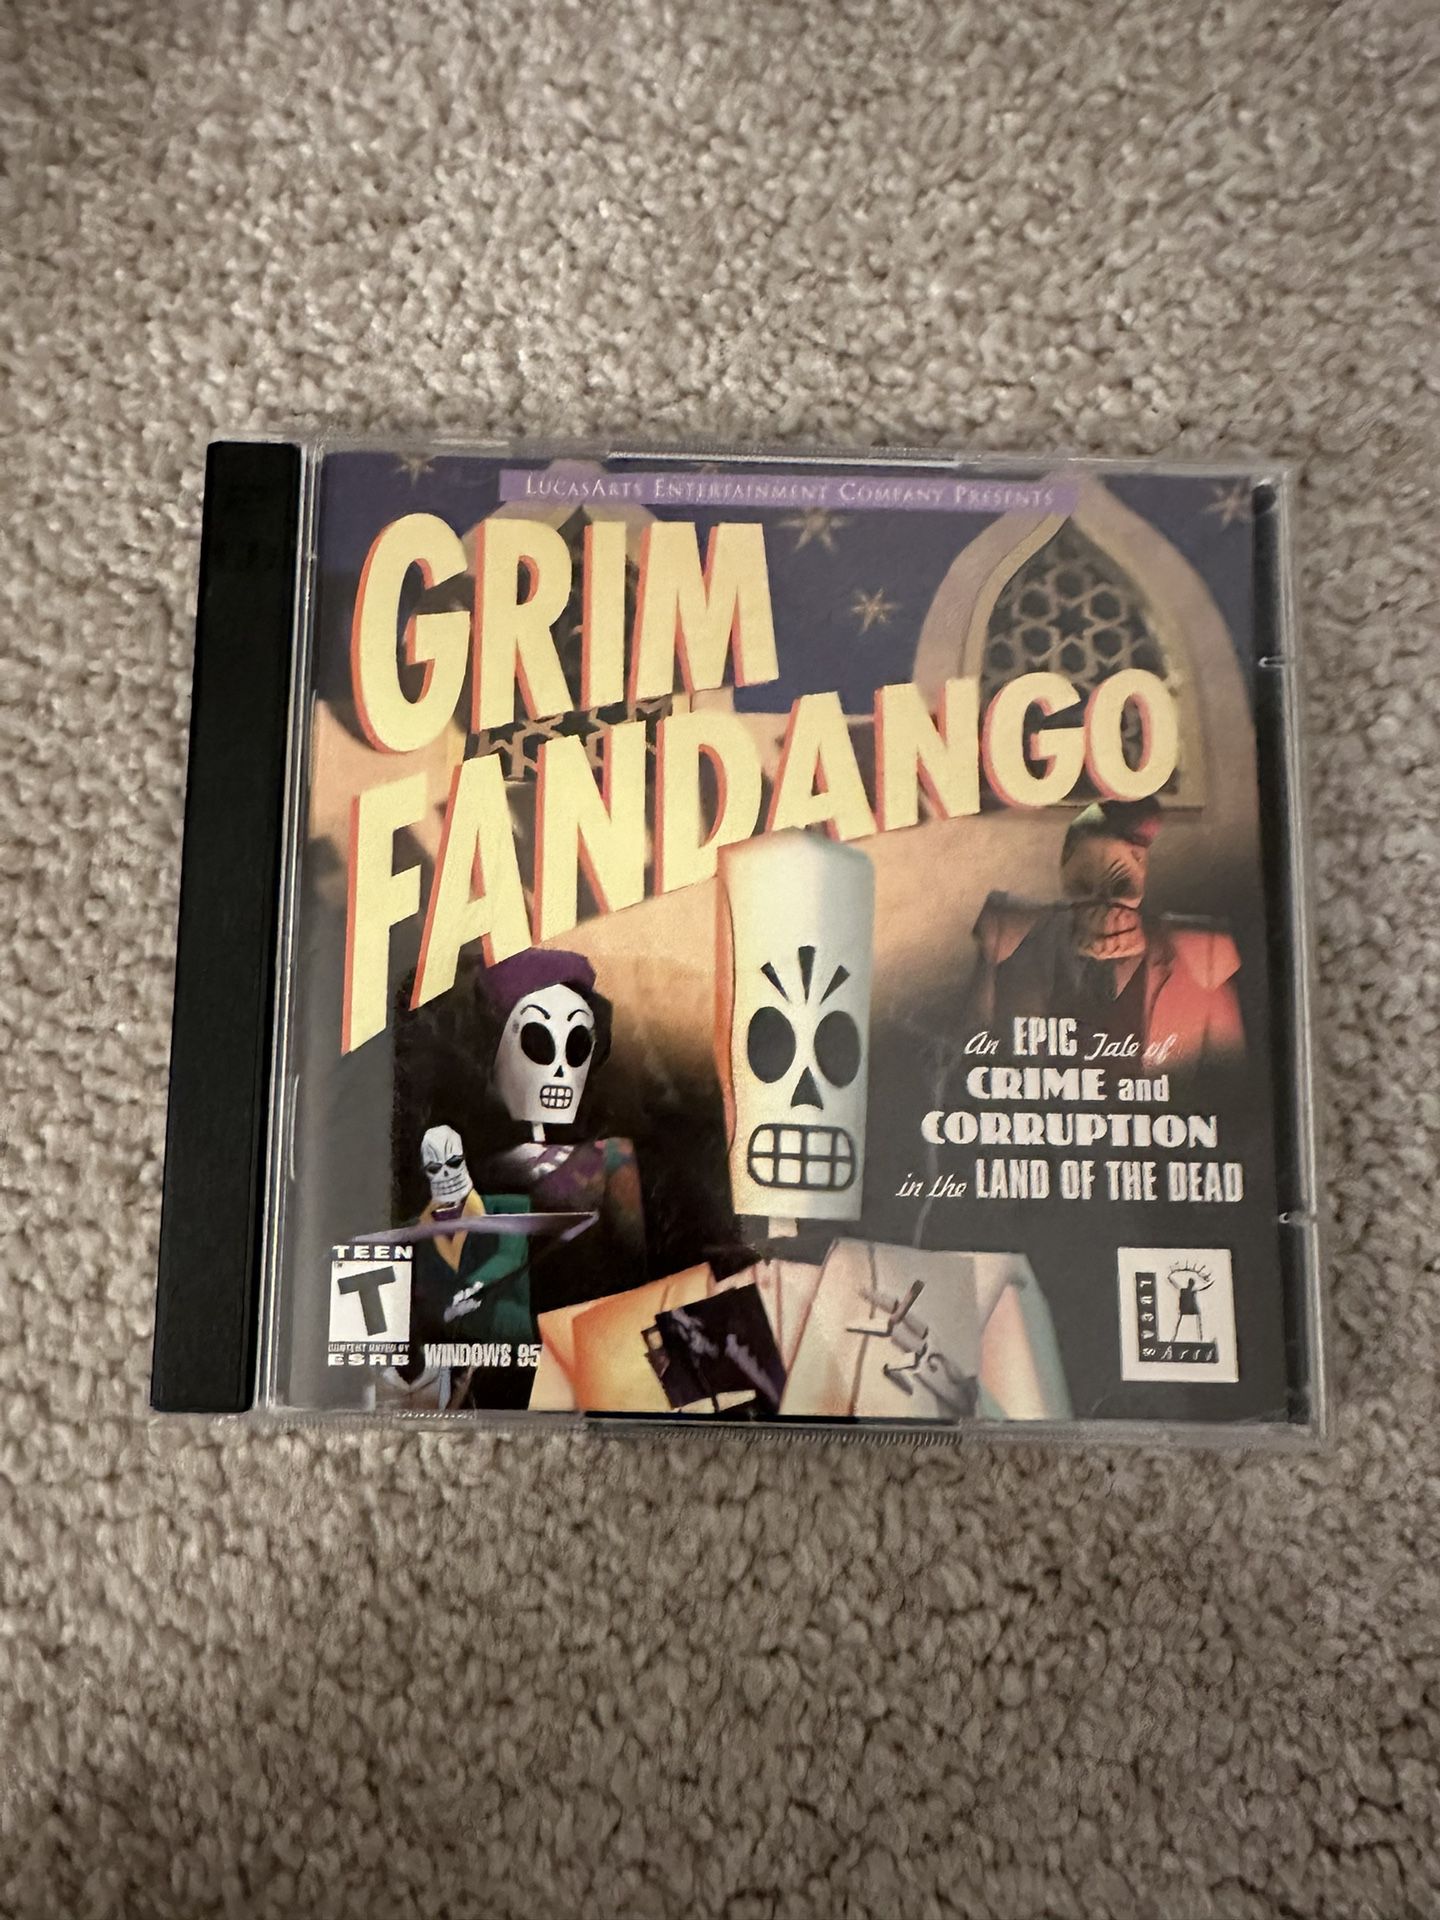 Grim Fandango PC Video Game CD-ROM, 2-Disc Set, 1997, LucasArts